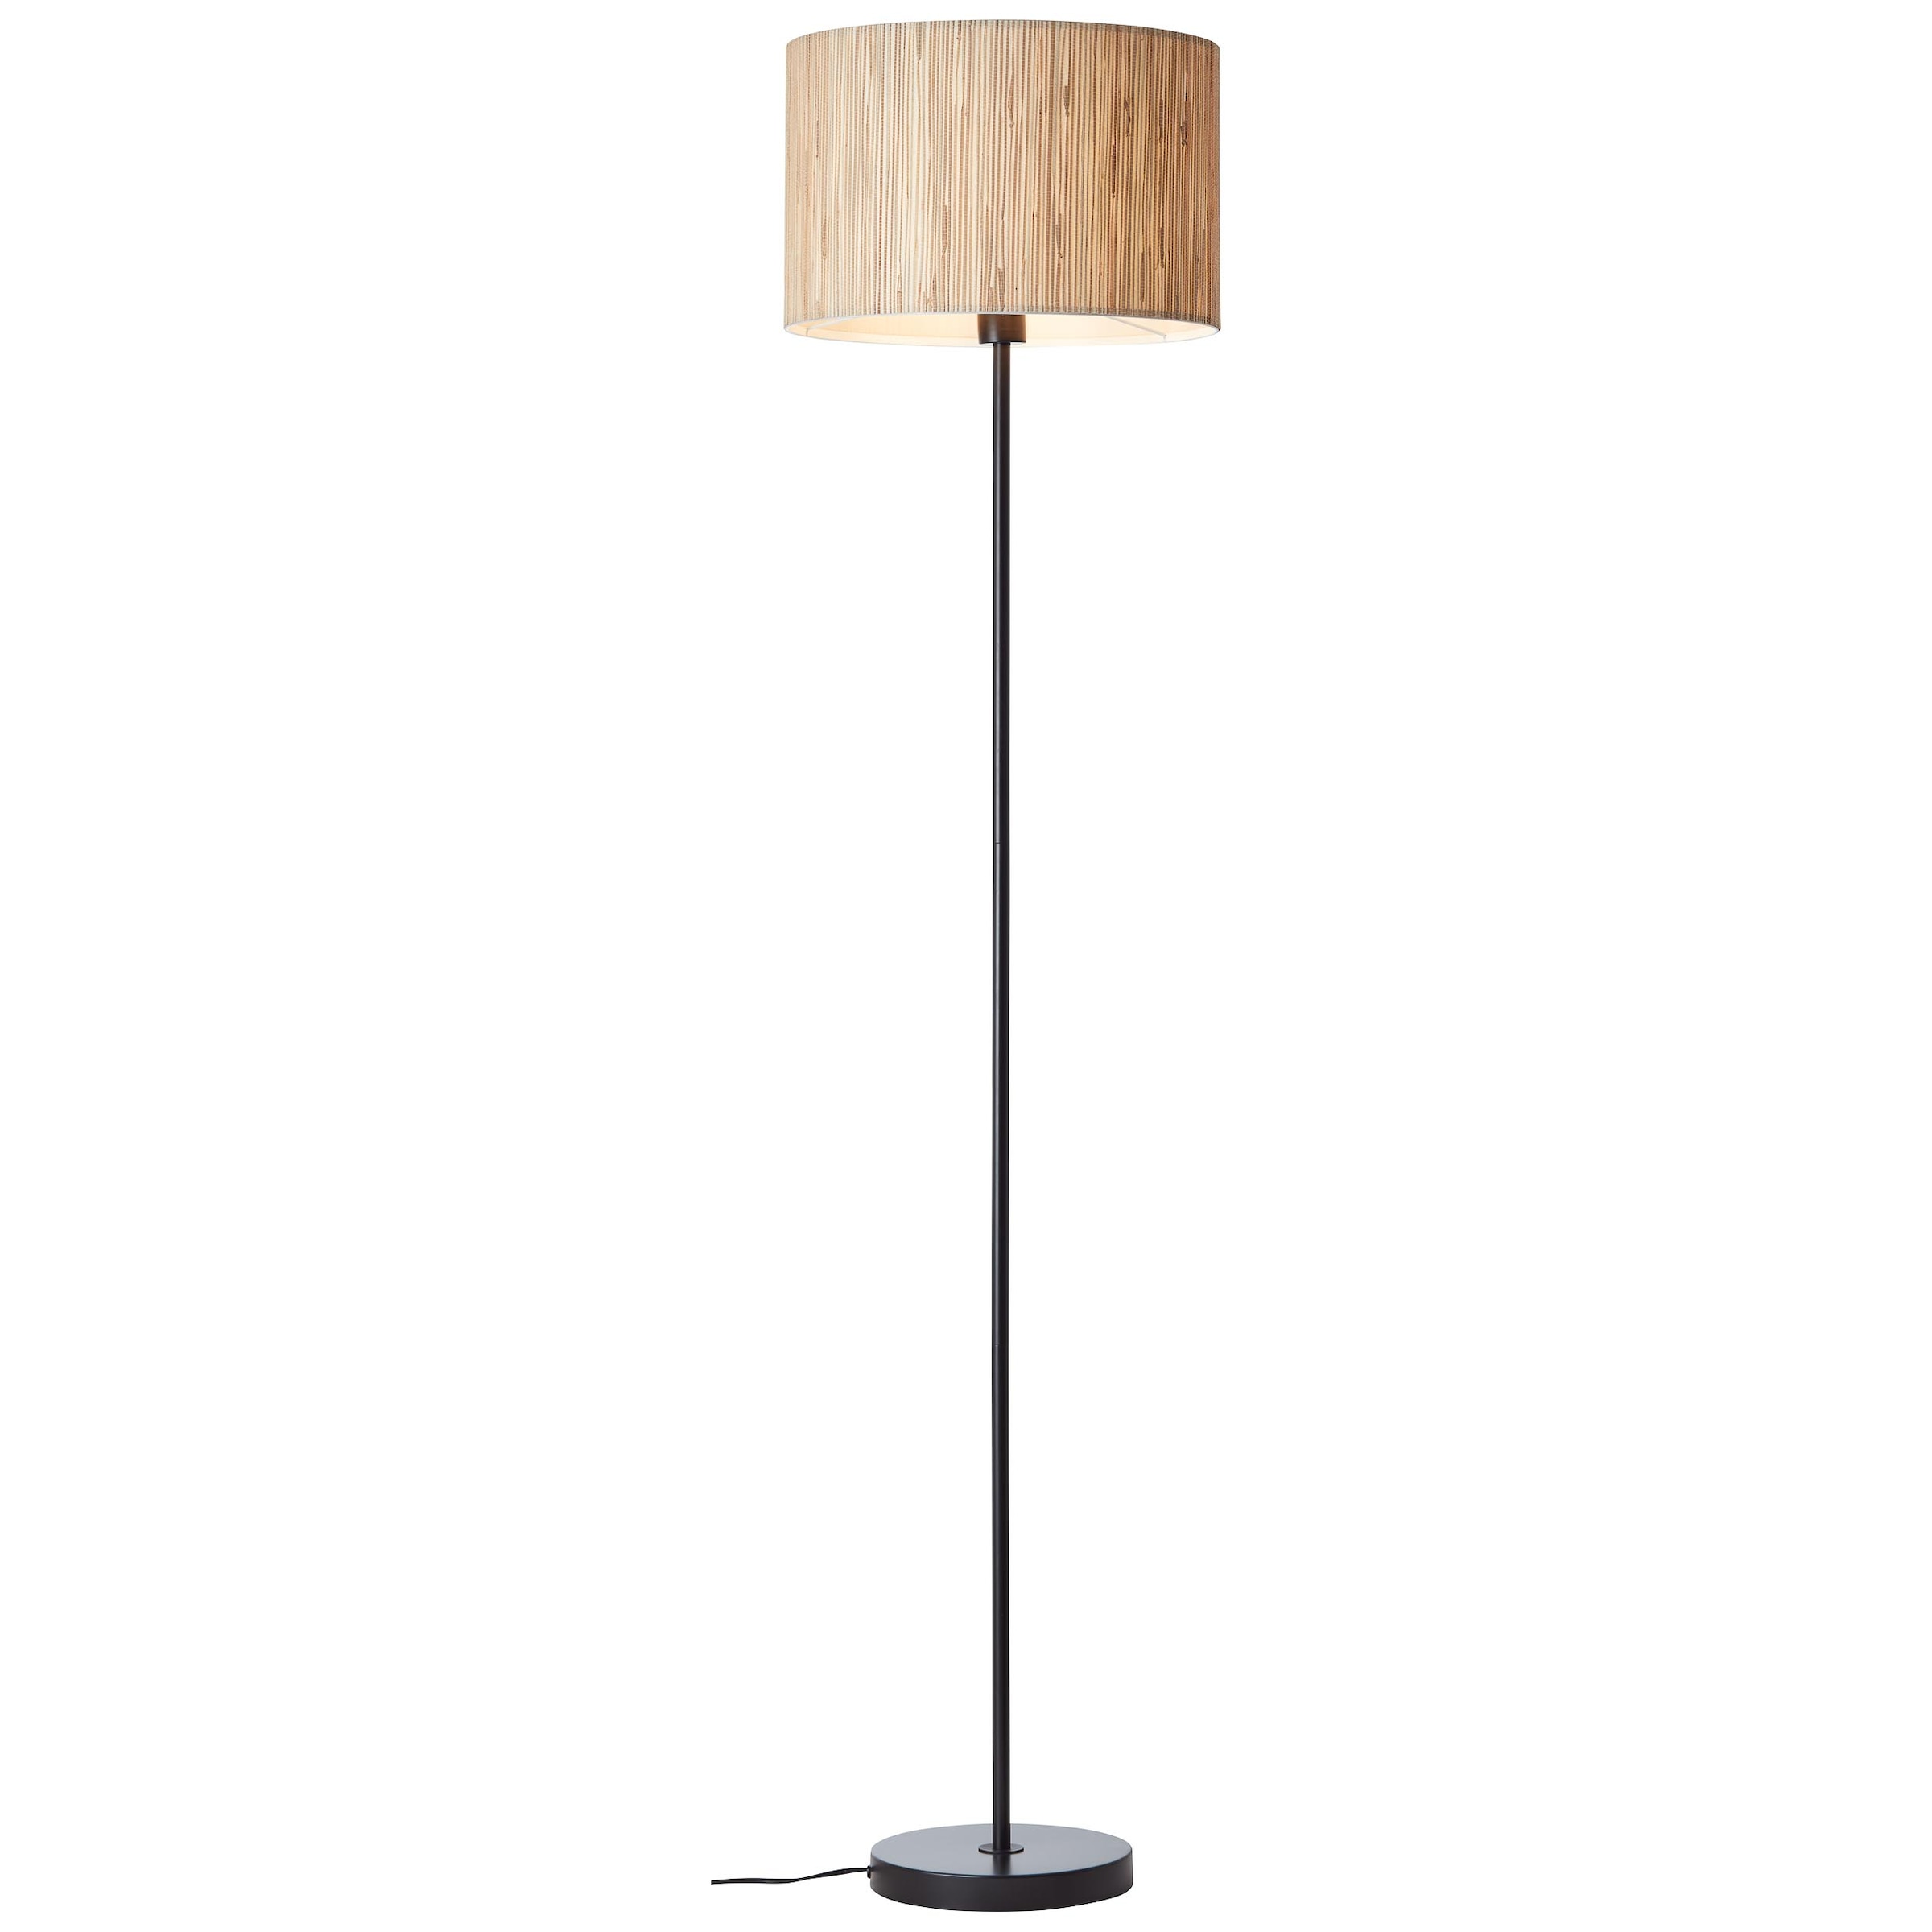 Brilliant Stehlampe »Wimea«, 1 flammig-flammig, 161,5 cm Höhe, Ø 38 cm, 1 x E27, Metall/Seegras, schwarz/natur